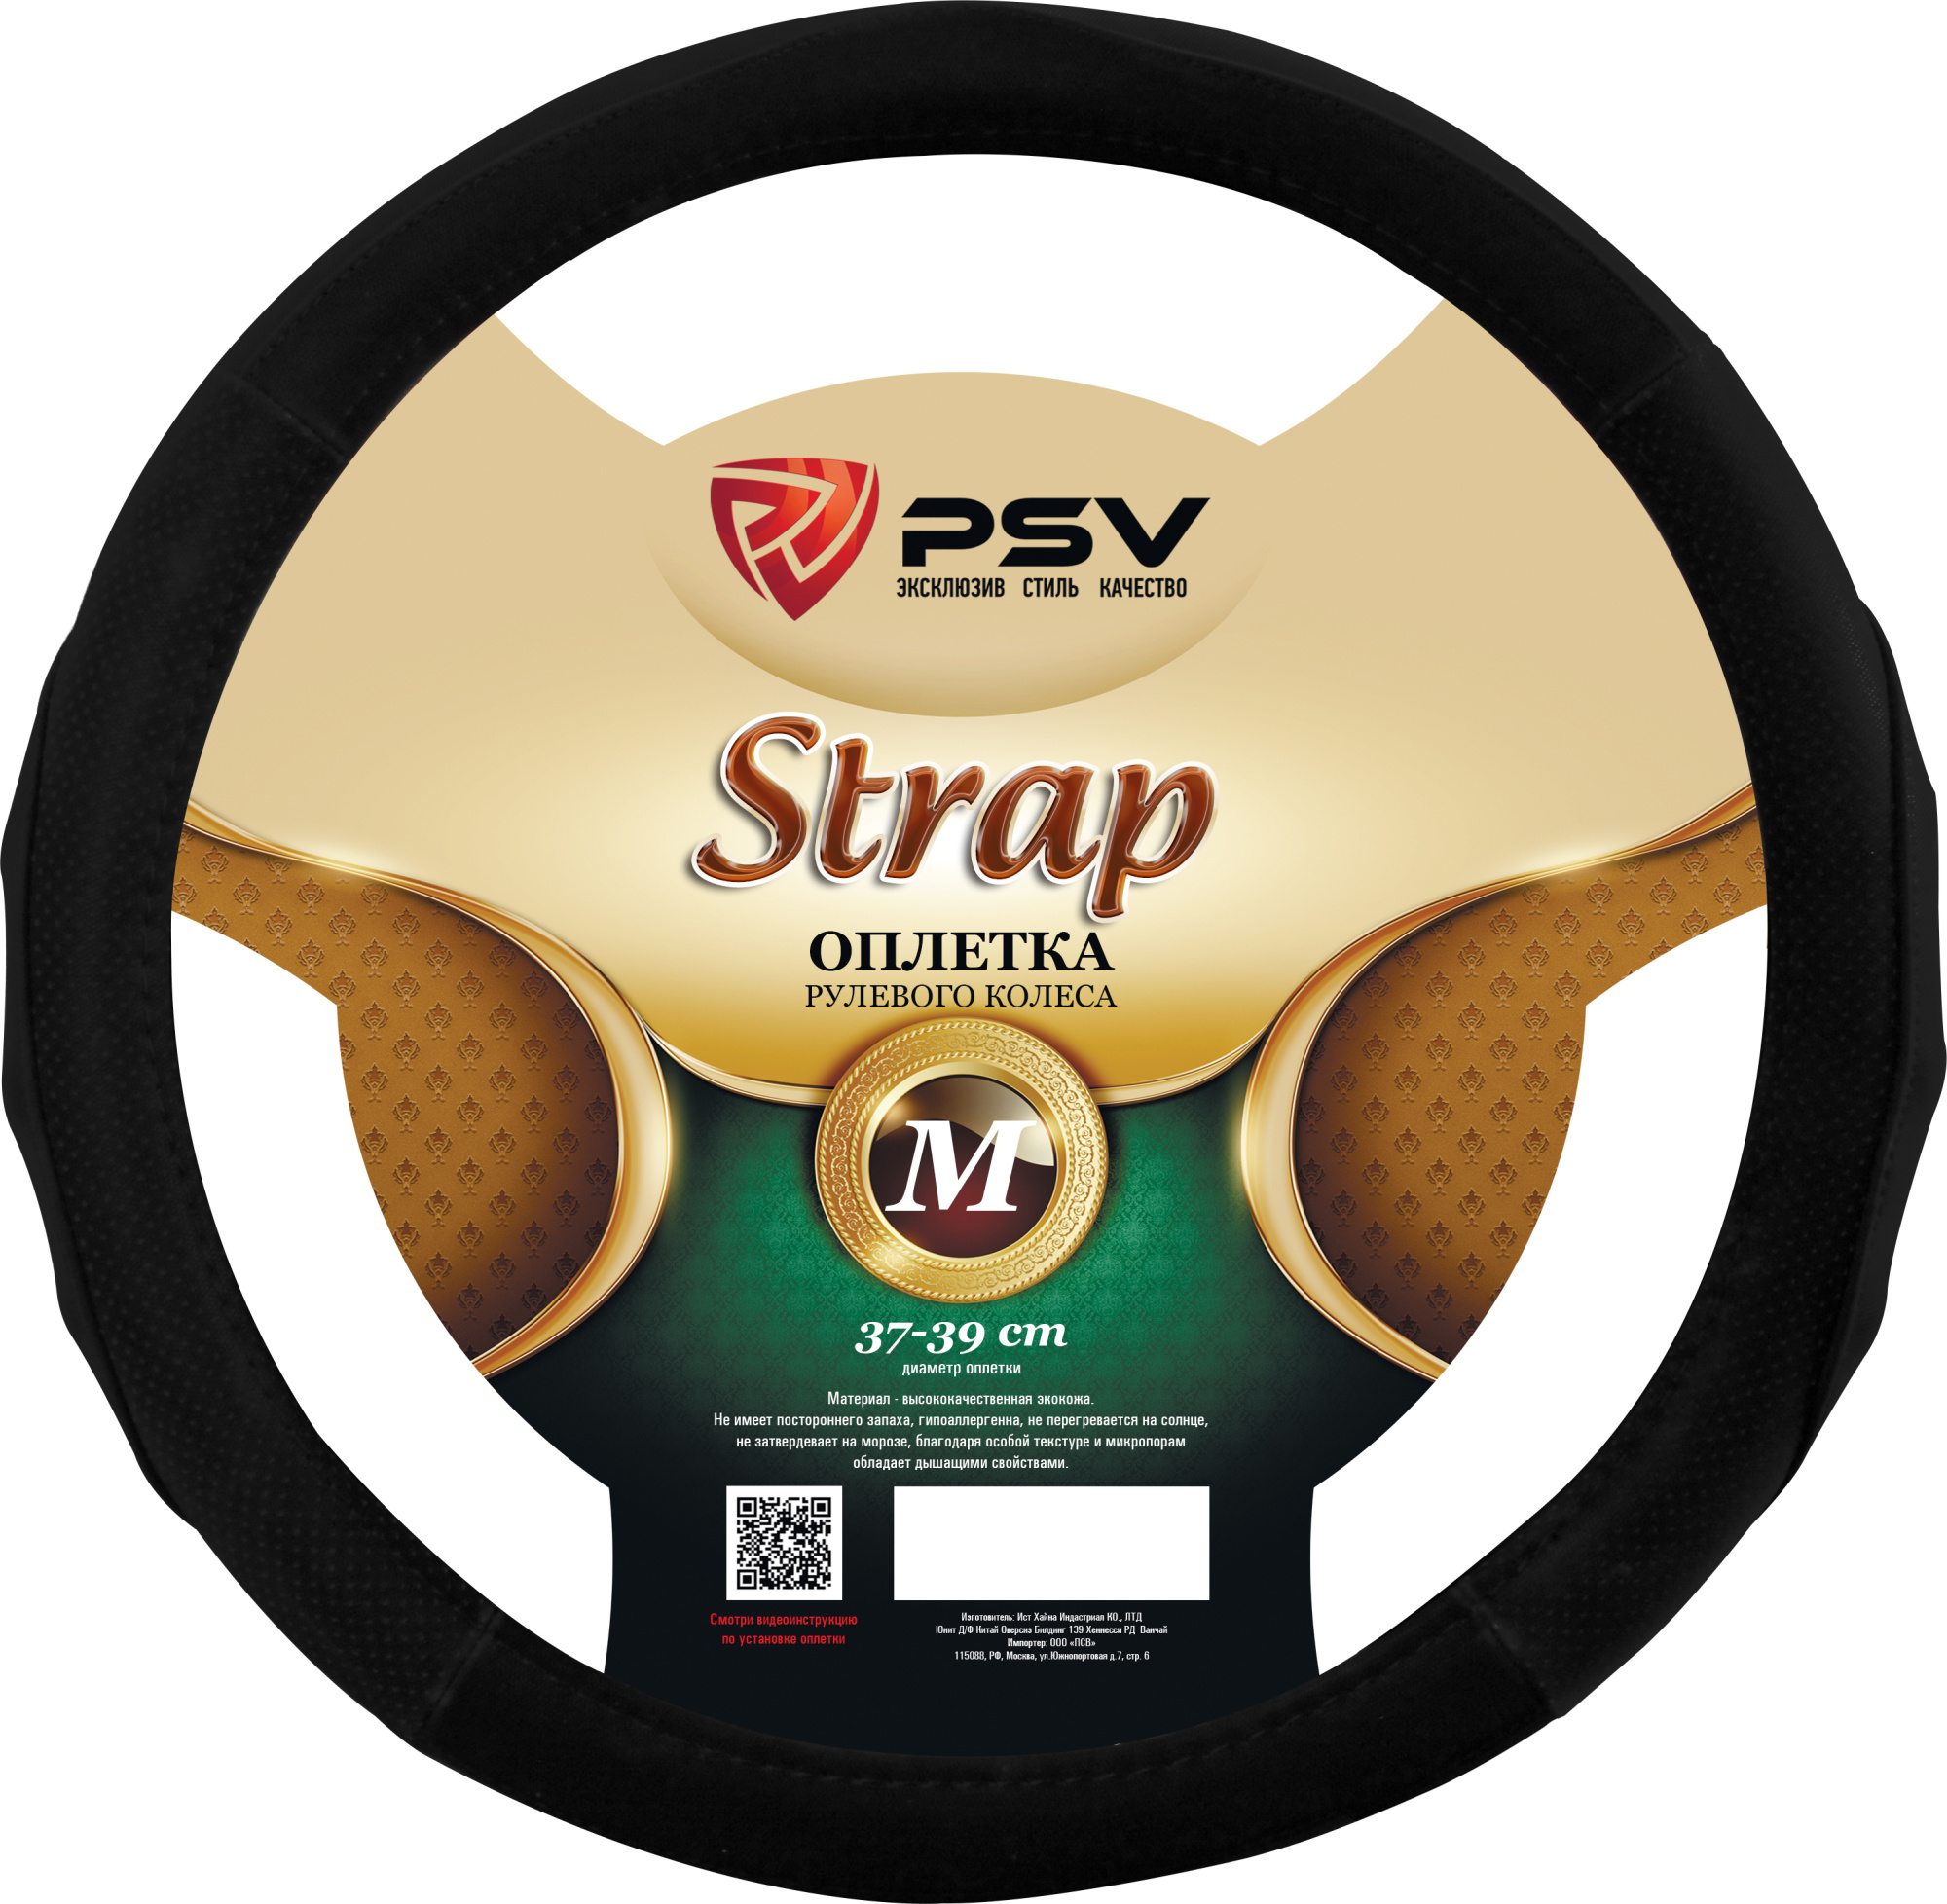 Оплетка PSV "Strap", черная, M